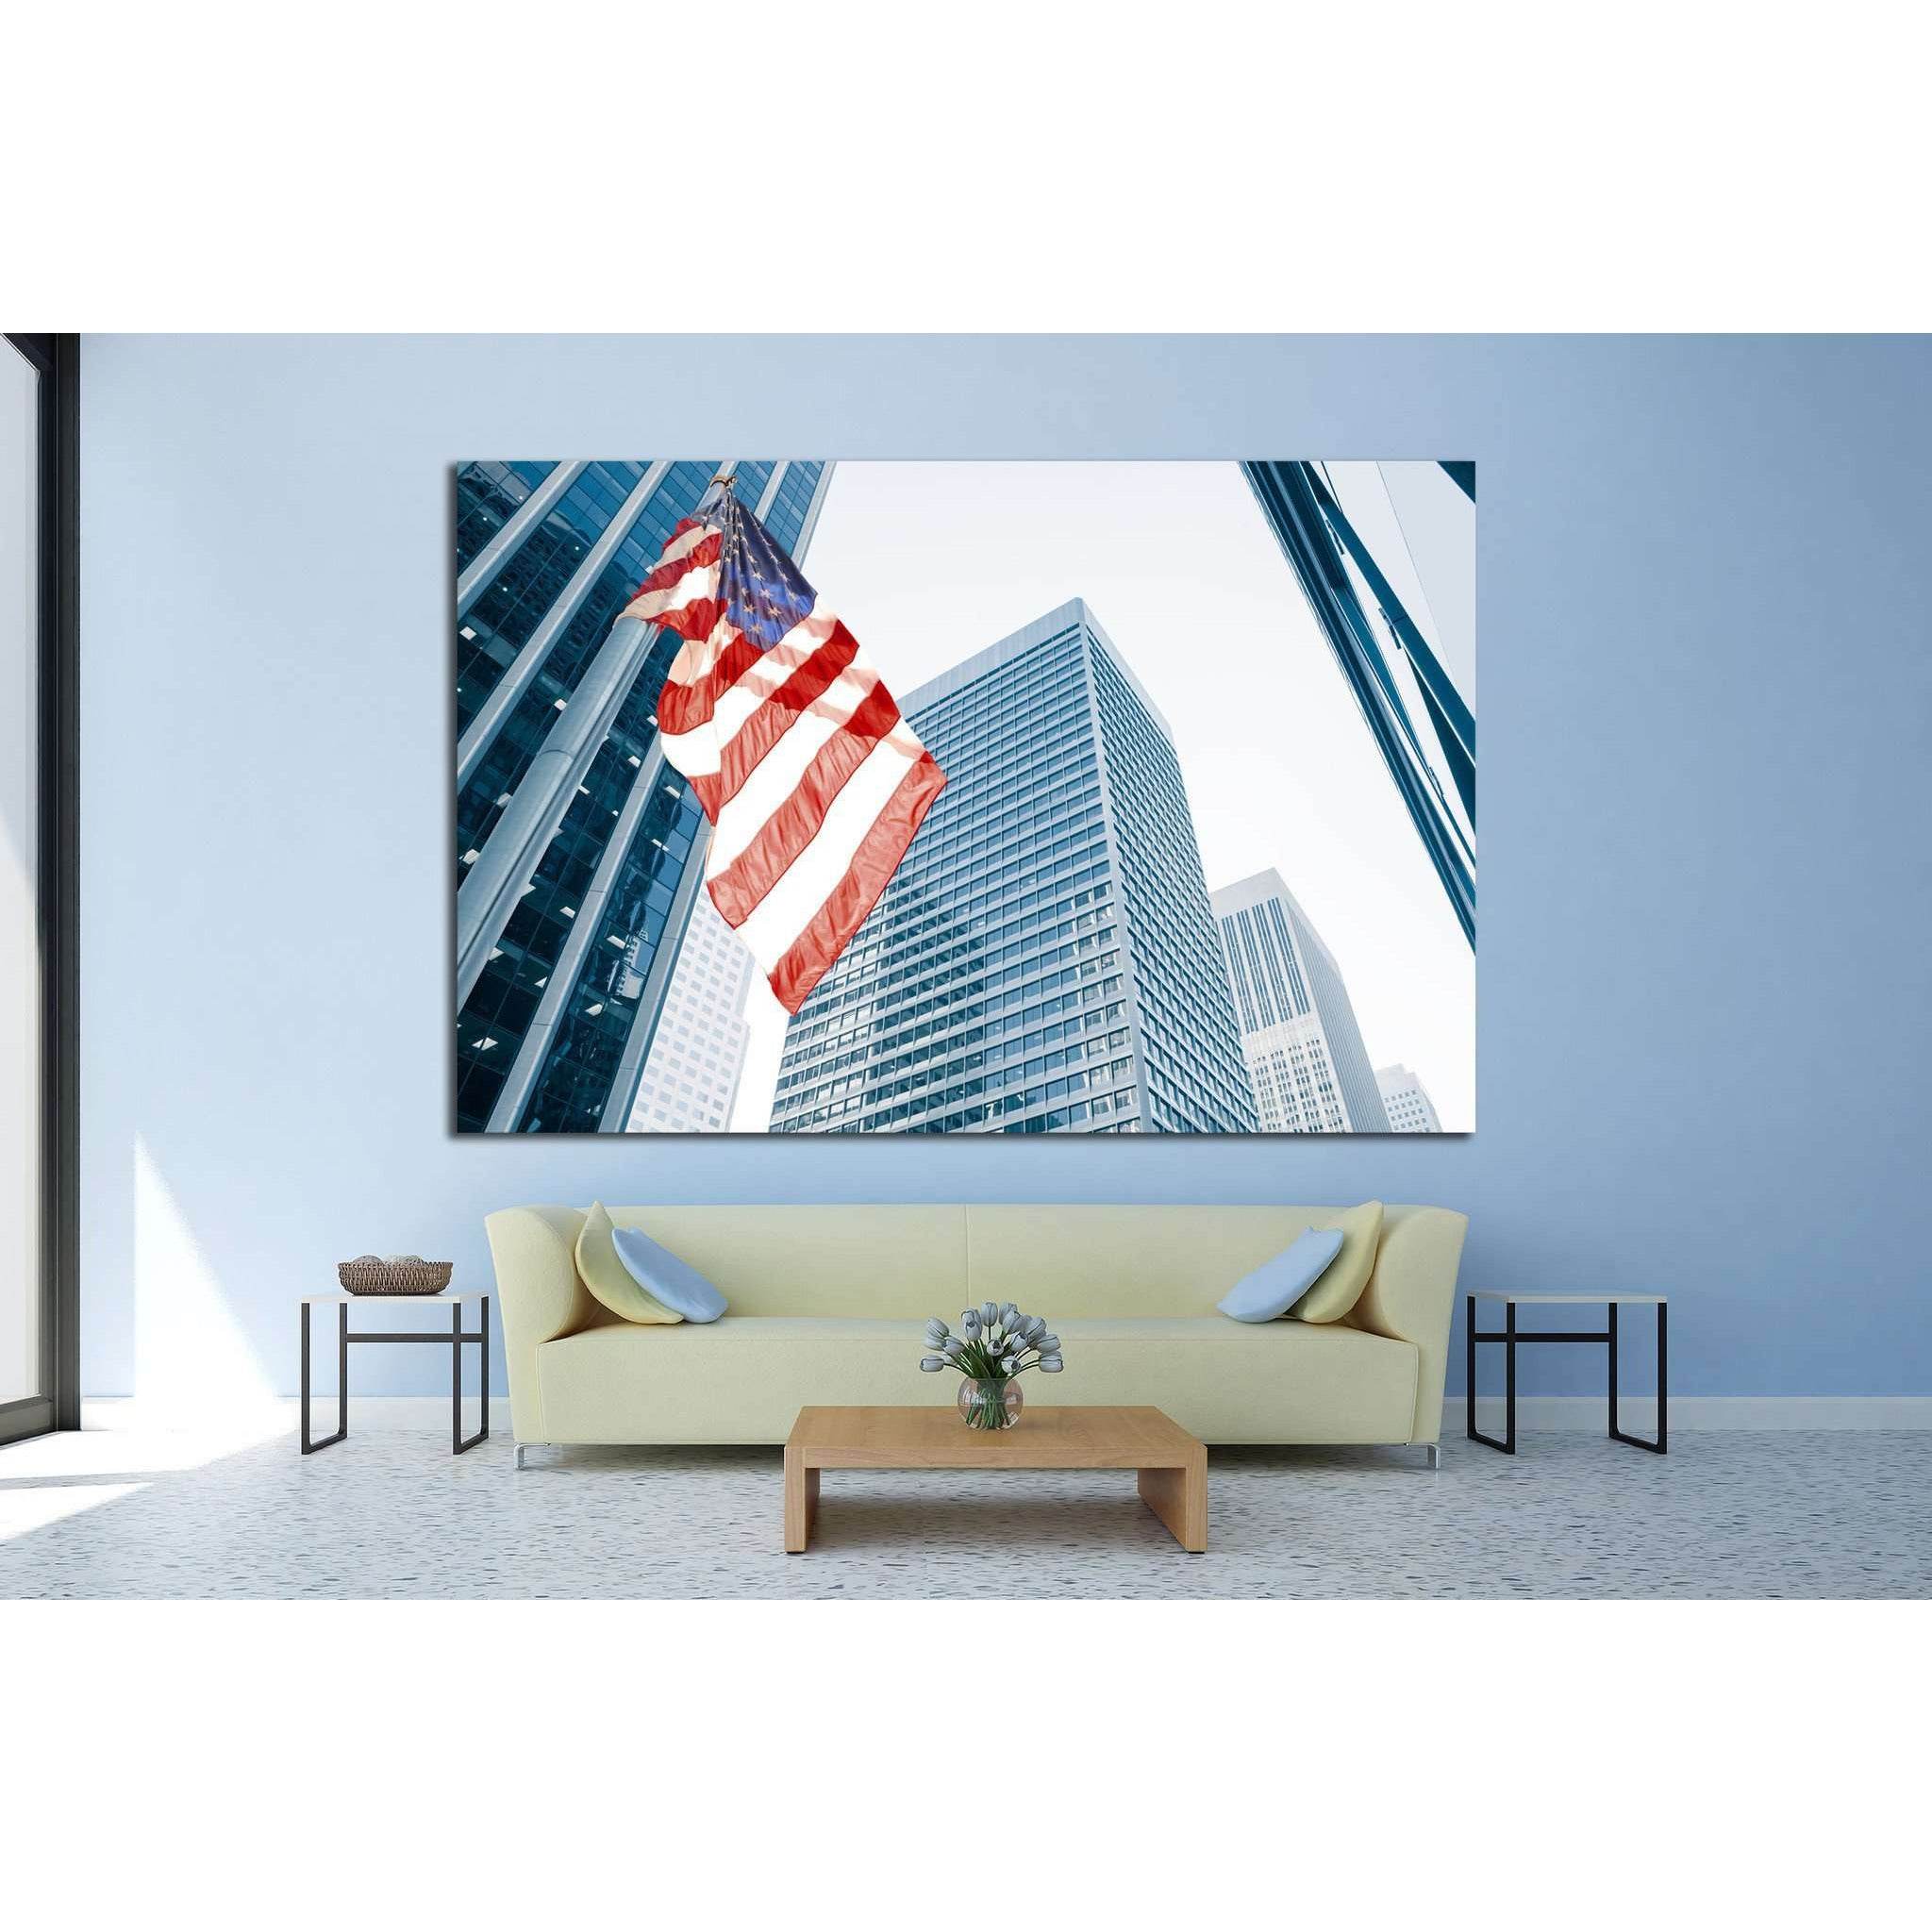 American flag on blue building №1288 - canvas print wall art by Zellart